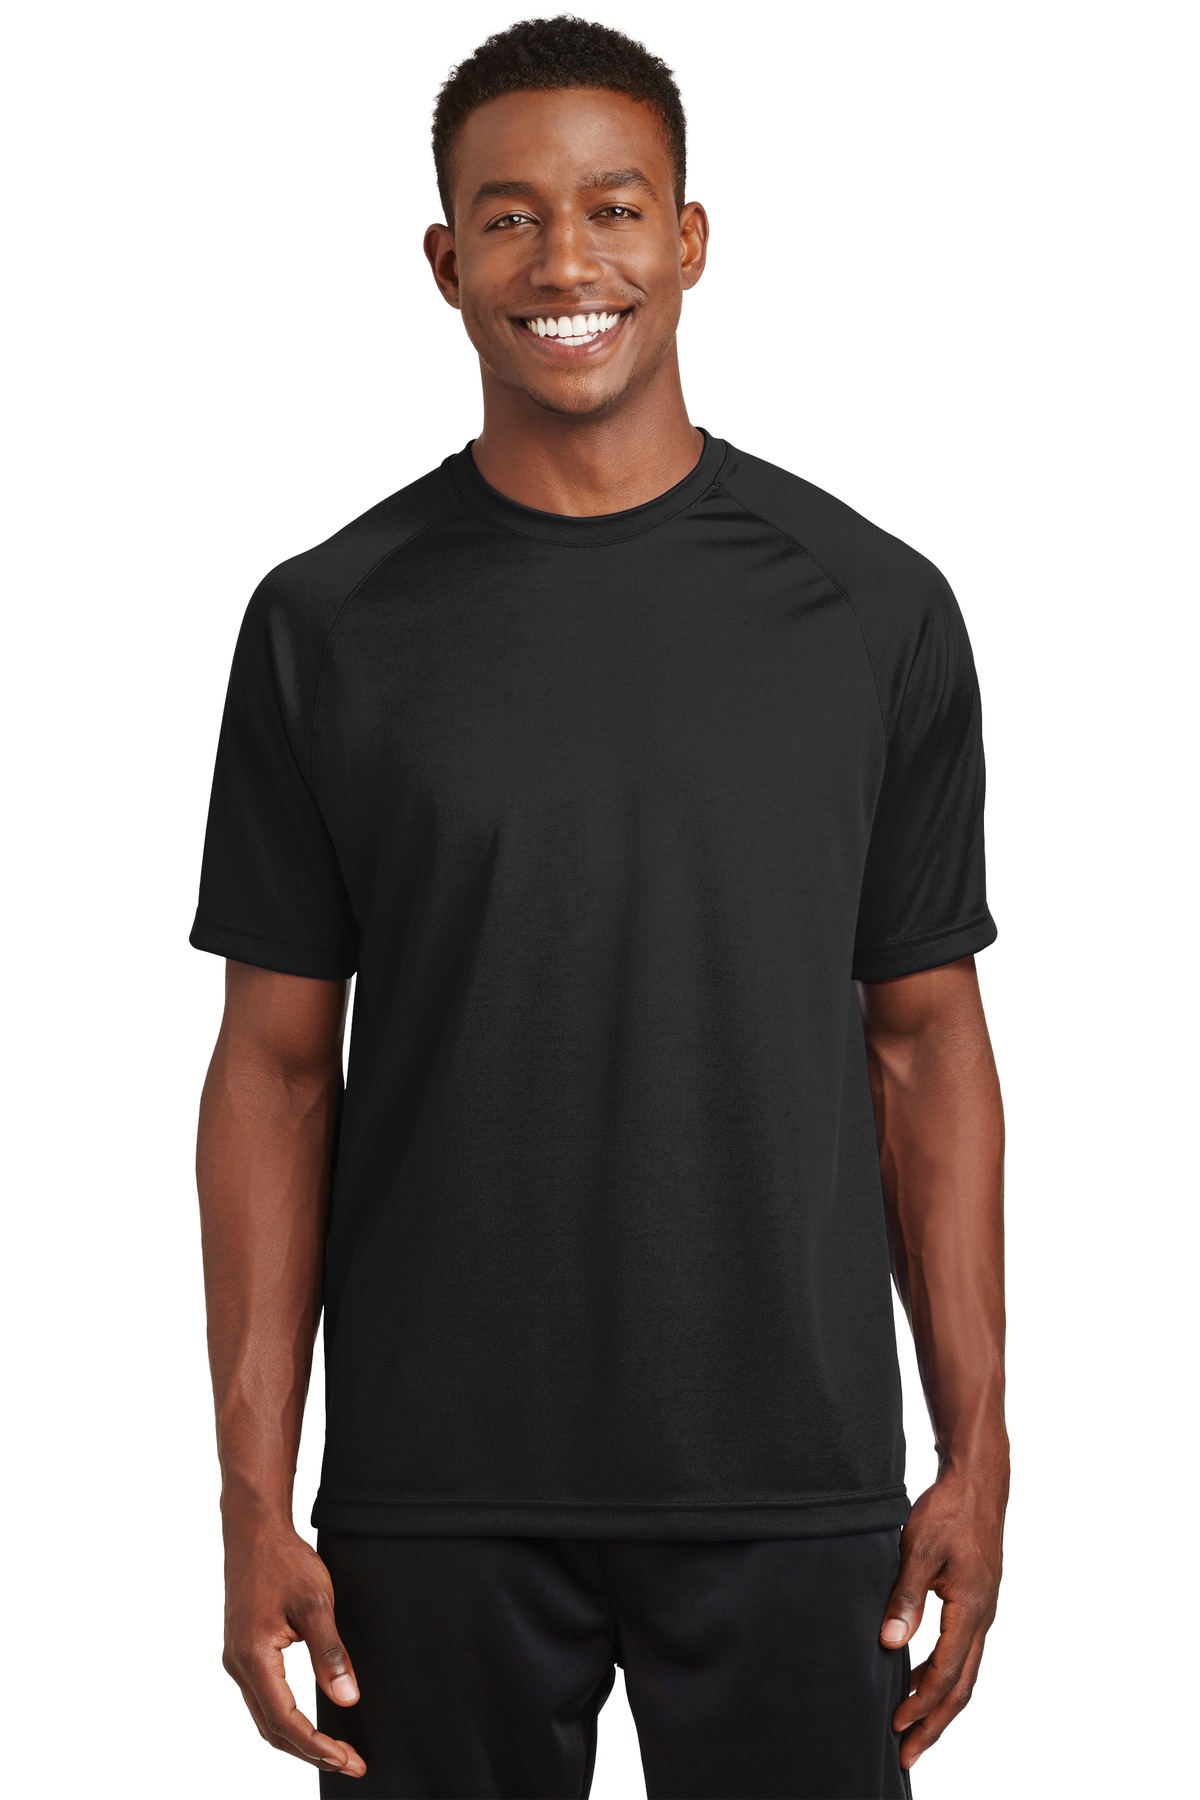 Sport-Tek Dry Zone Short Sleeve Raglan T-Shirt - T473